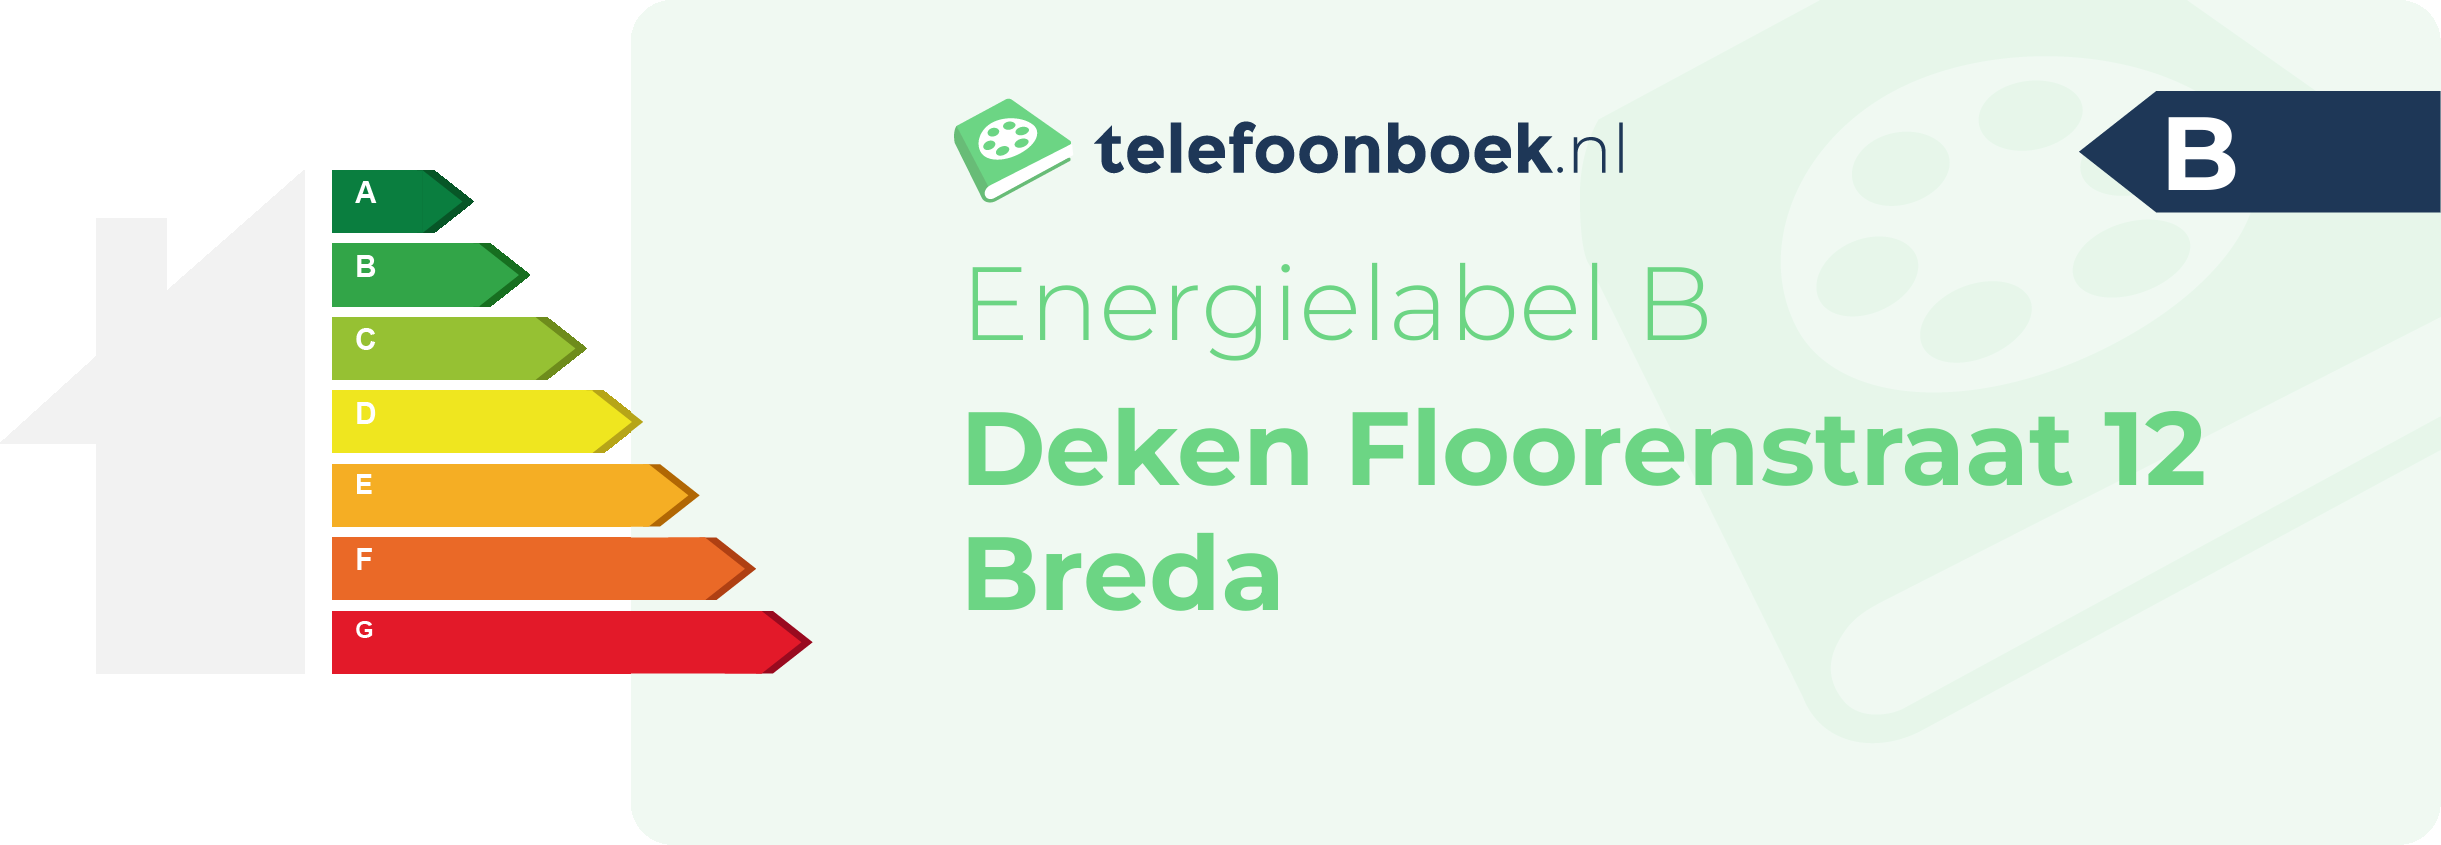 Energielabel Deken Floorenstraat 12 Breda